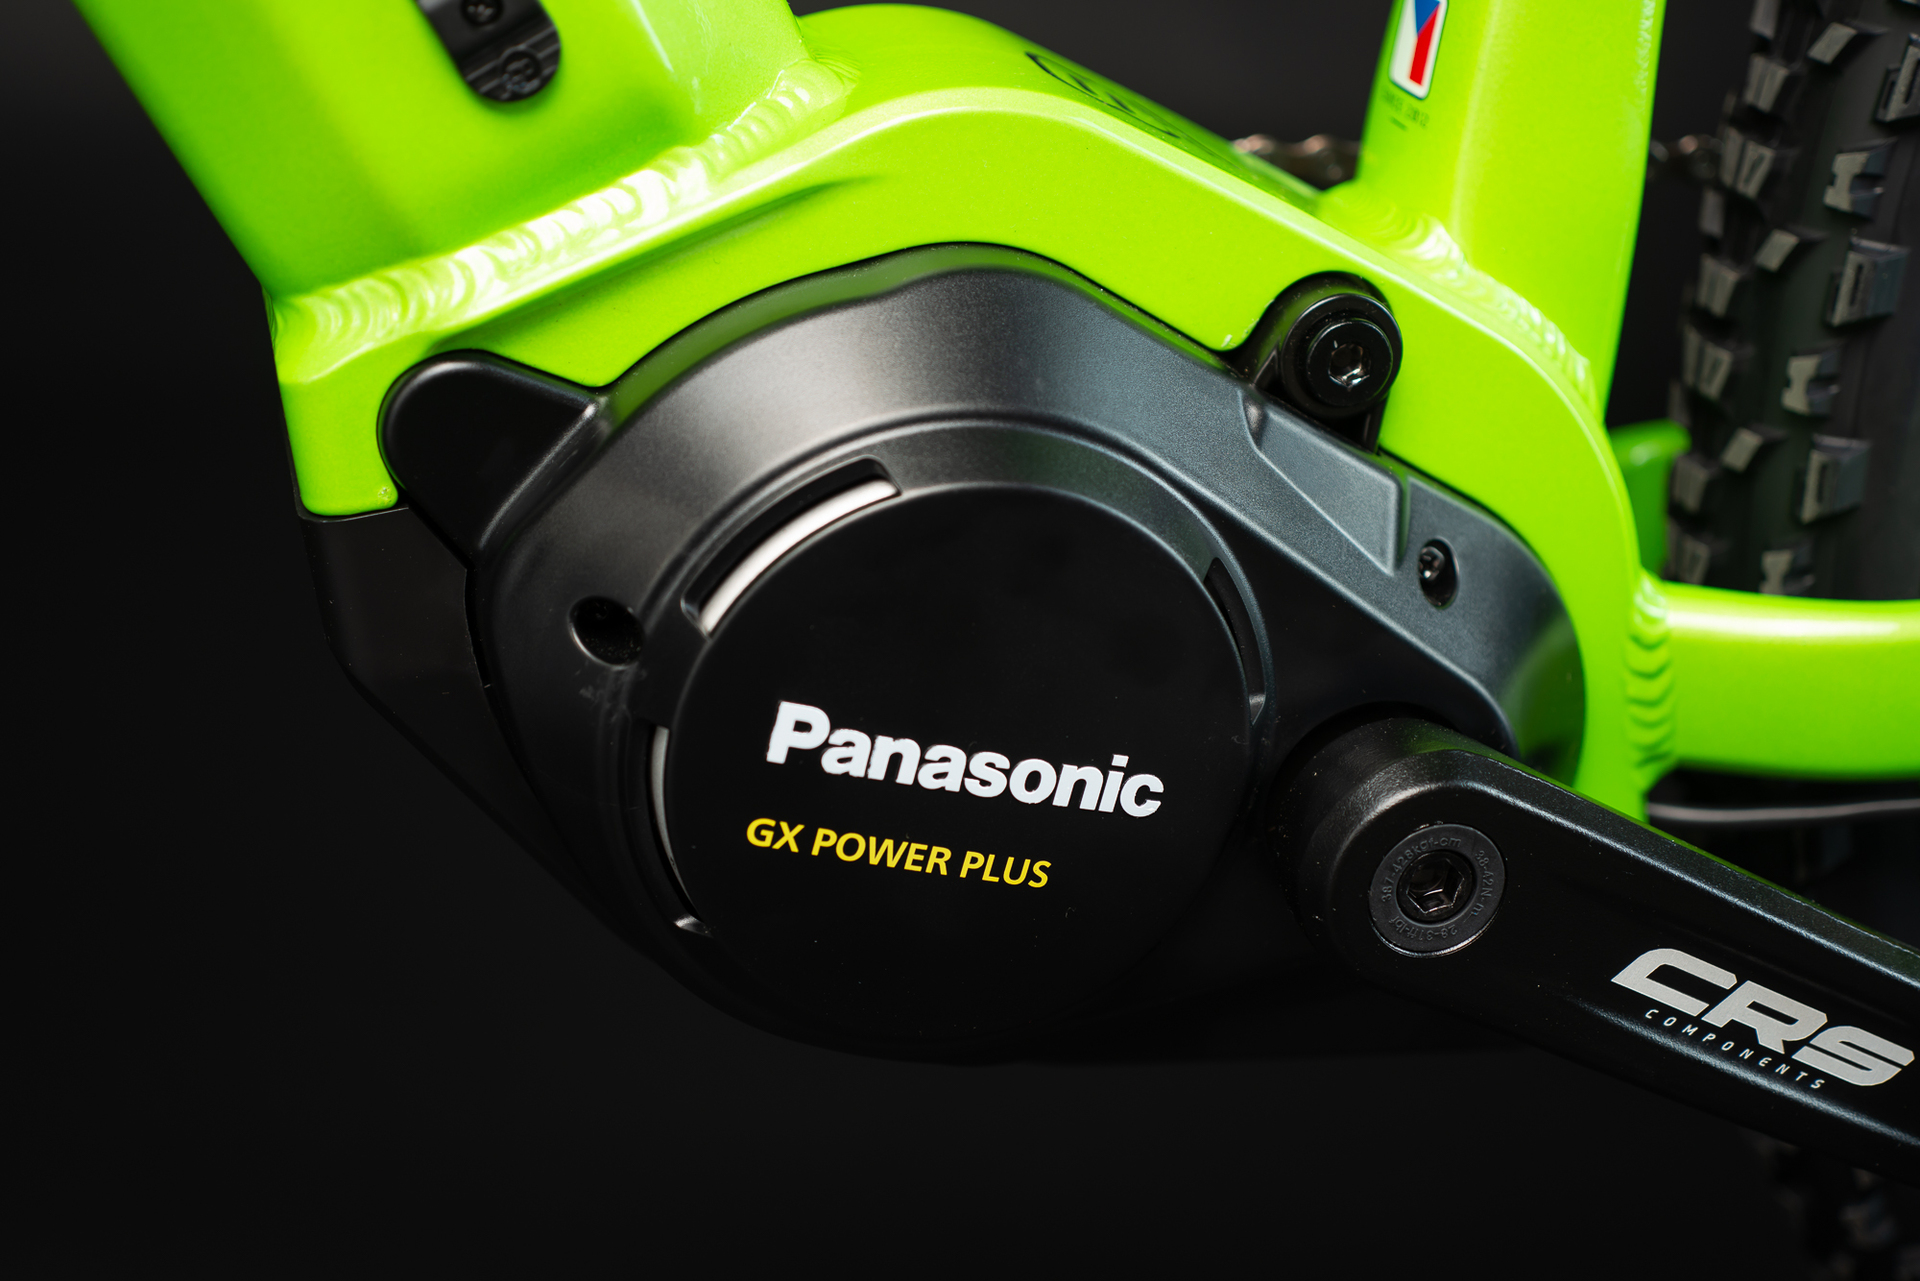 Electric bikes with Panasonic engine